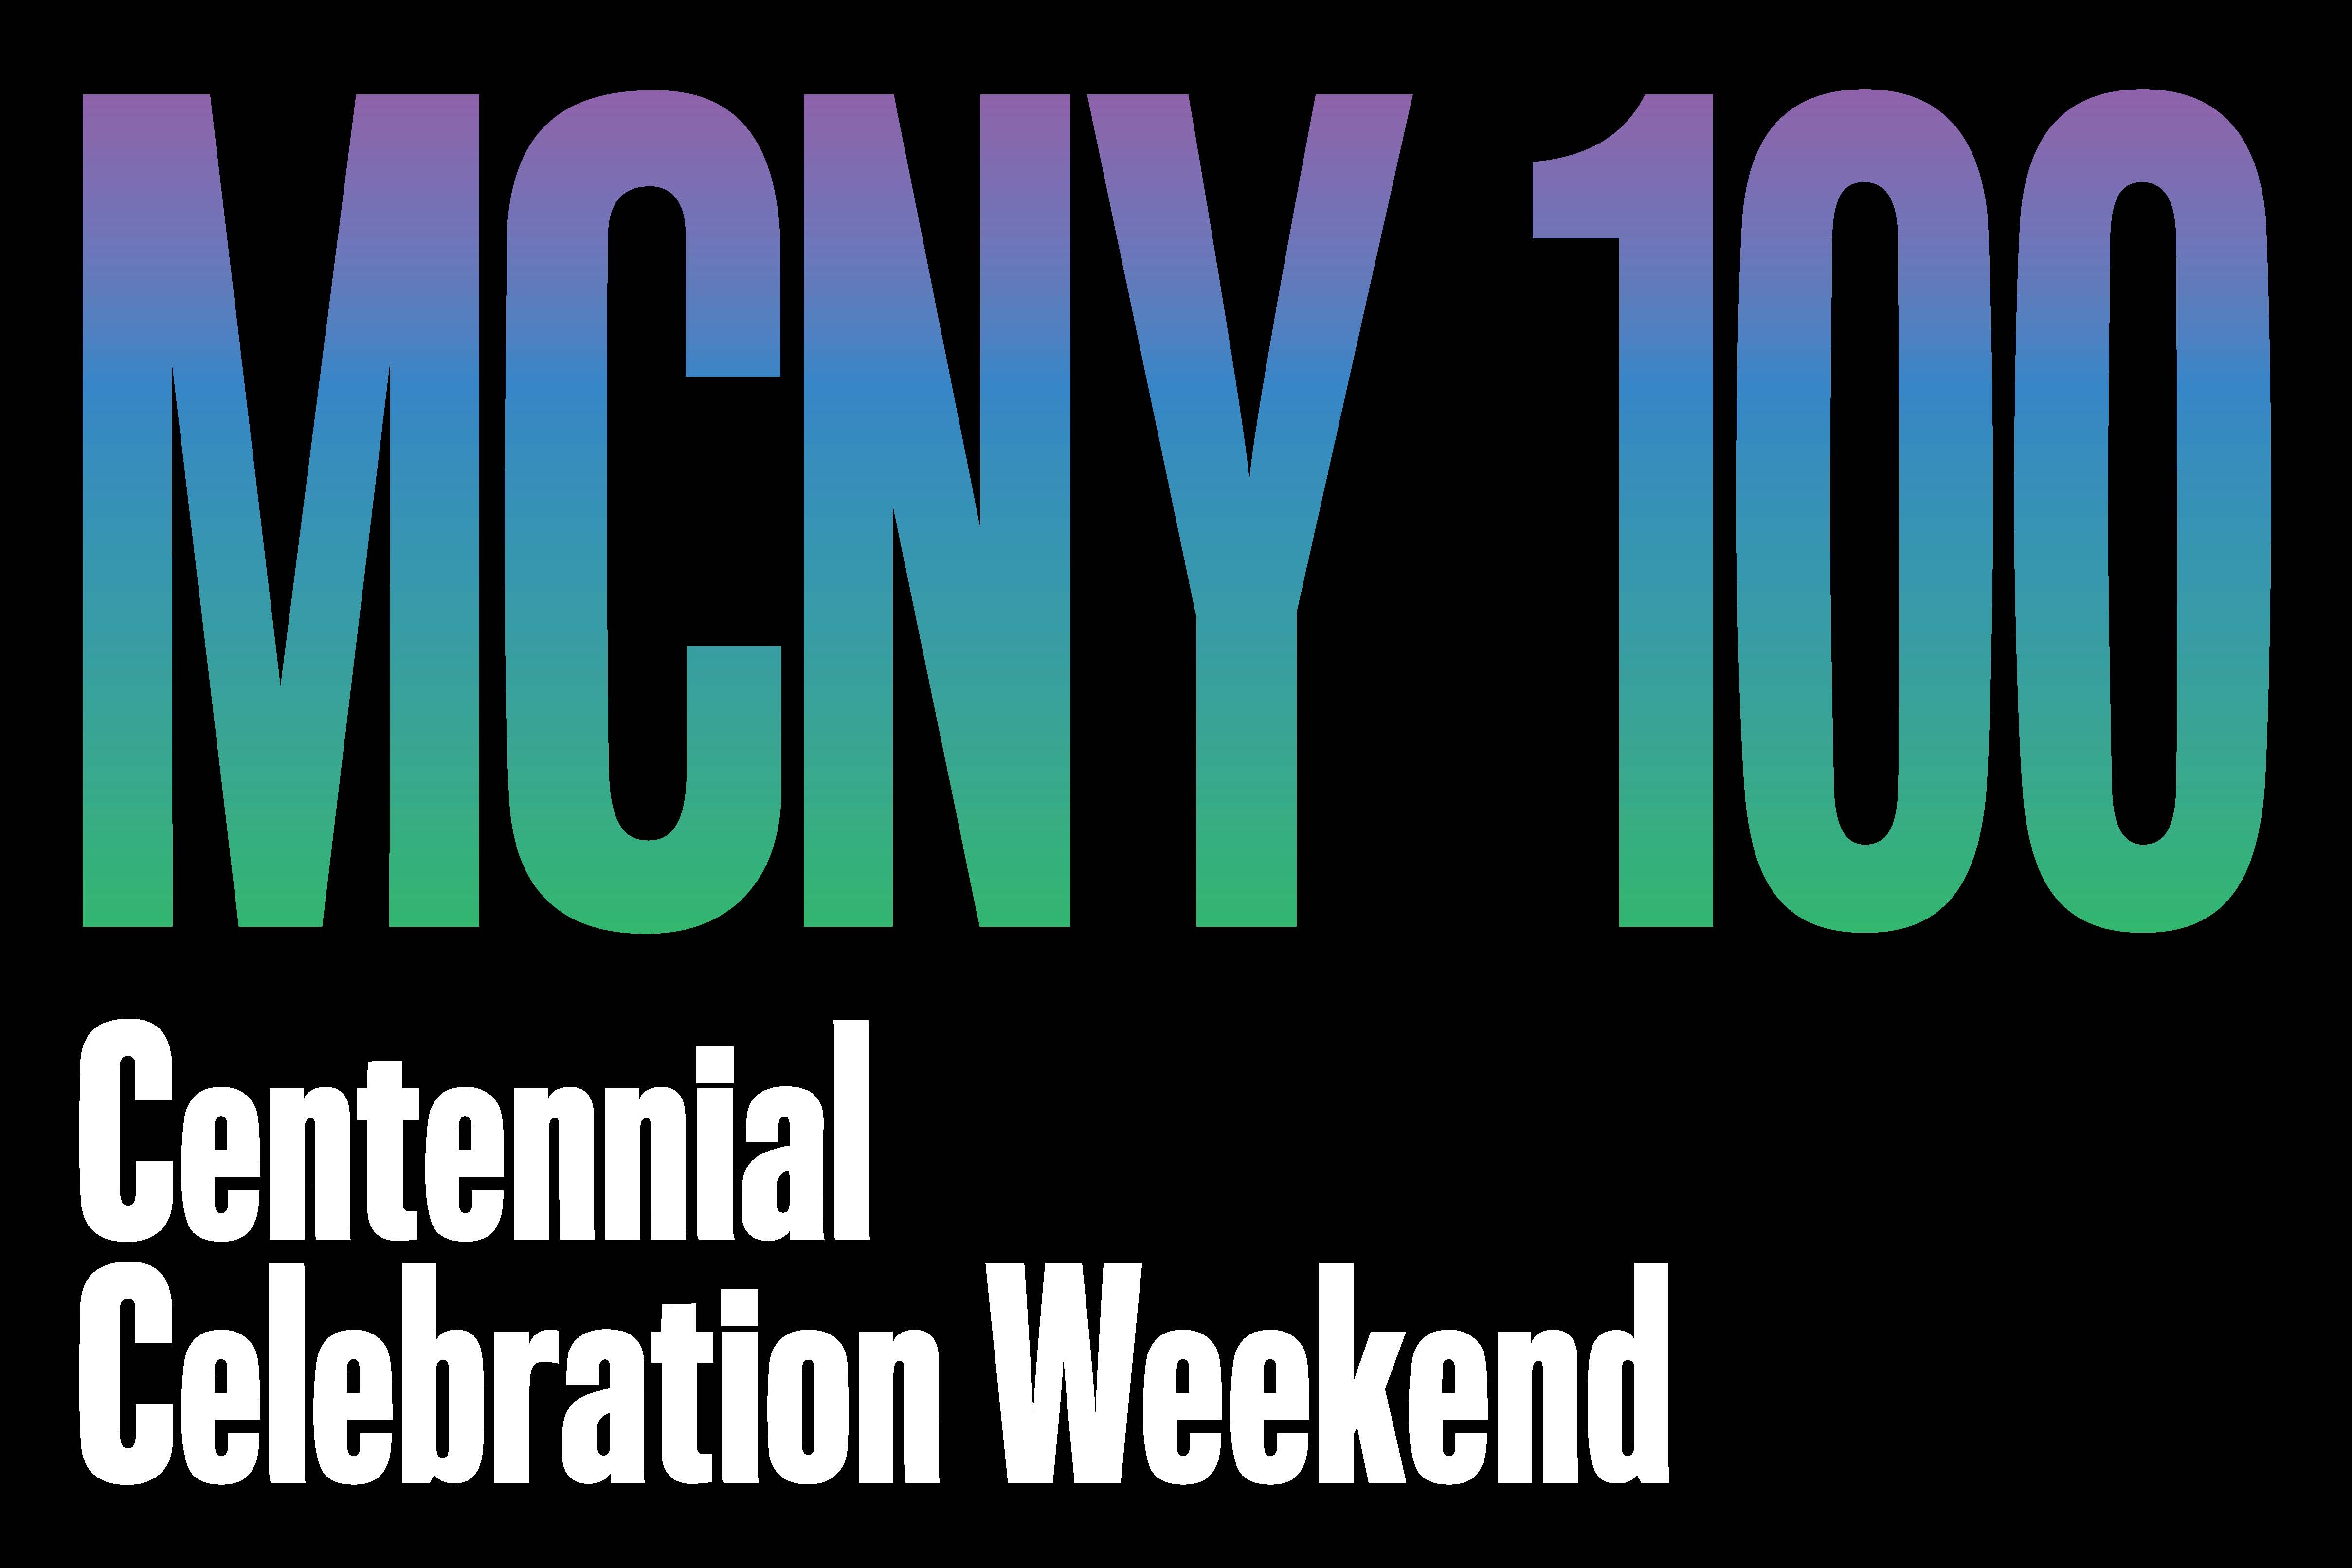 MCNY 100 は黒の背景に青と緑のグラデーションで書かれ、白で「XNUMX 周年祝賀週末」というサブタイトルが付けられています。